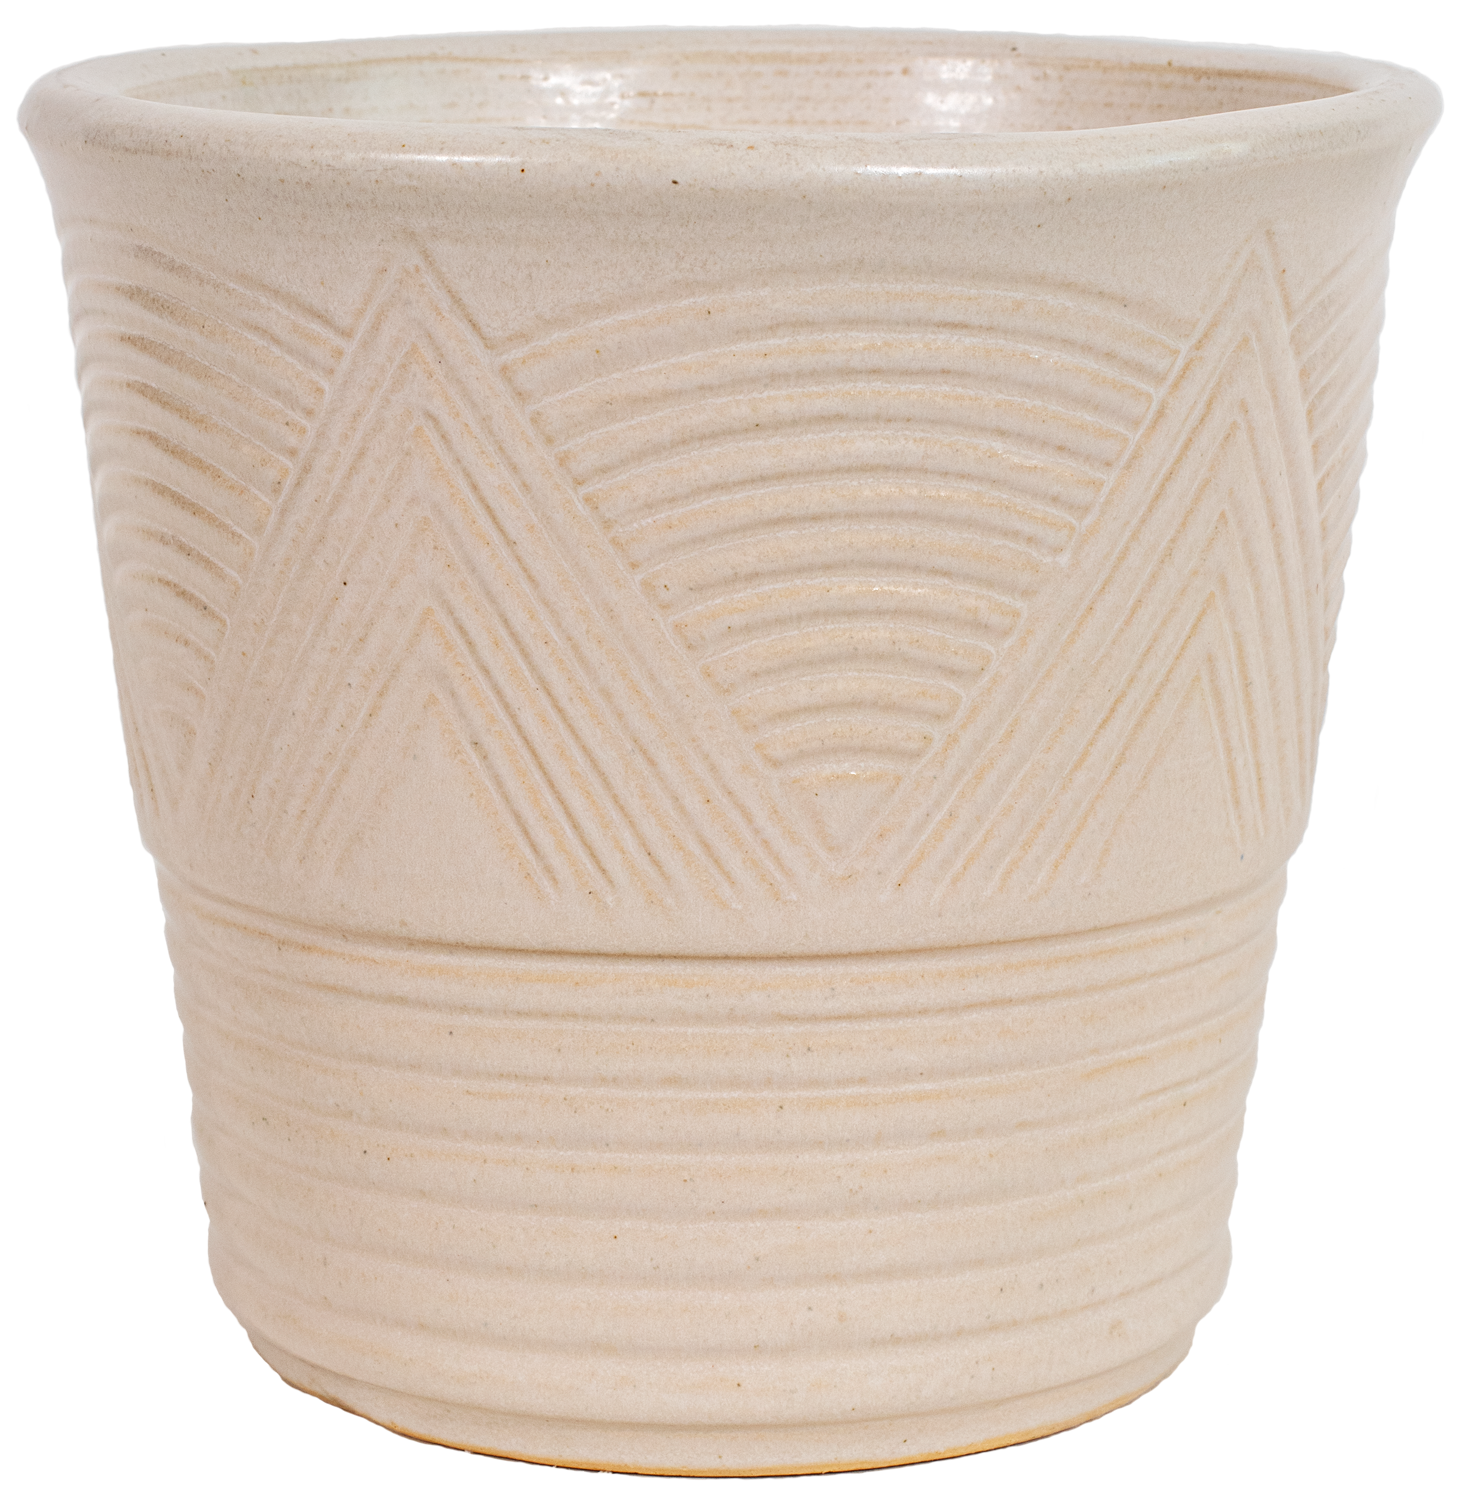 American Made indoor ceramic planter. Art deco style design in a white glaze color